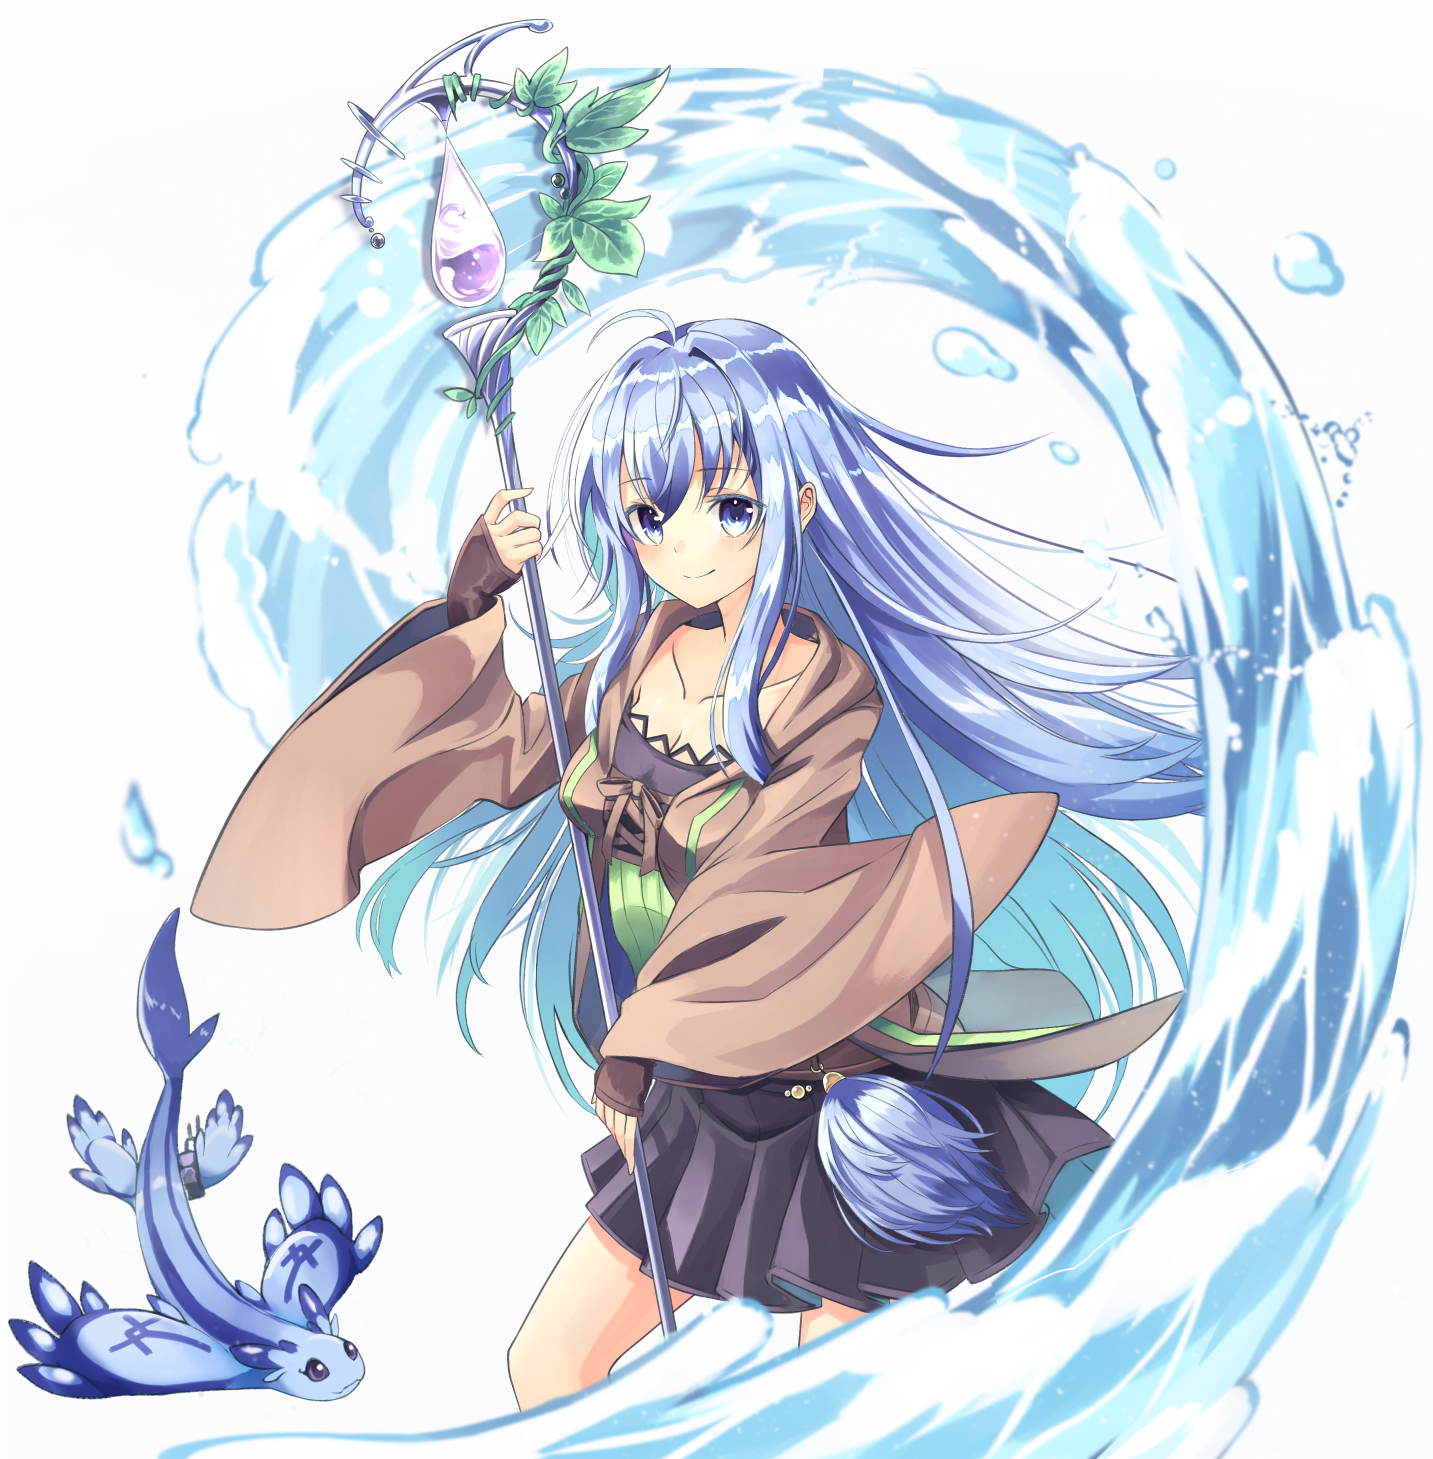 Anime 1433x1459 anime anime girls Yu-Gi-Oh! Eria the Water Charmer long hair blue hair artwork digital art fan art